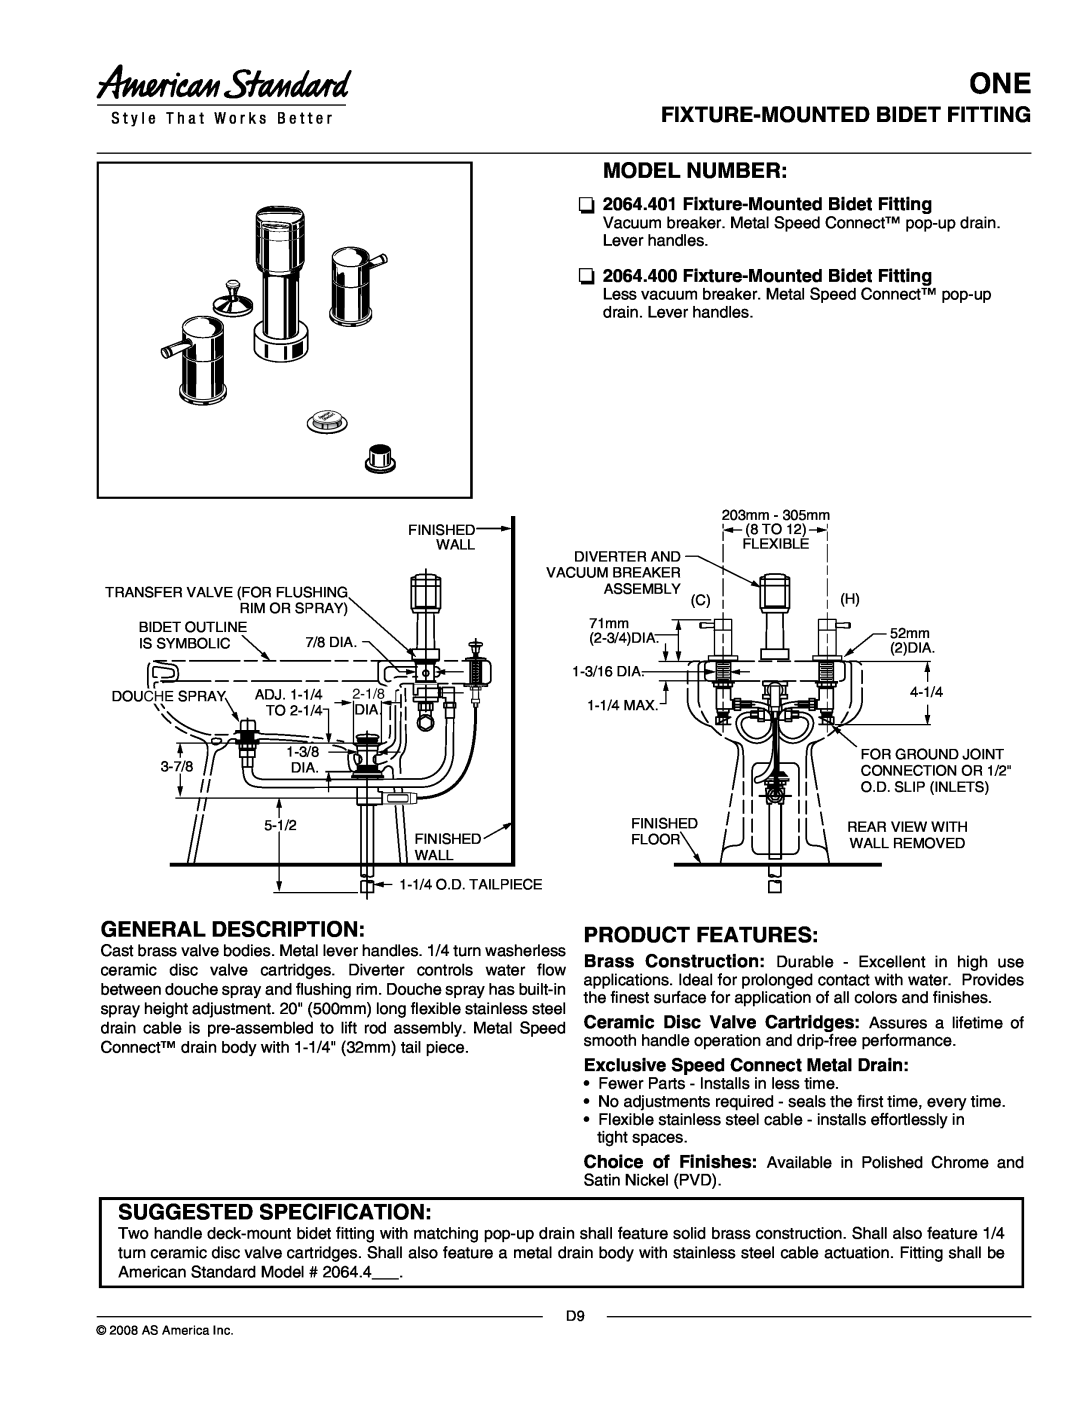 American Standard 2064.401 manual Fixture-Mountedbidet Fitting Model Number, General Description, Product Features 